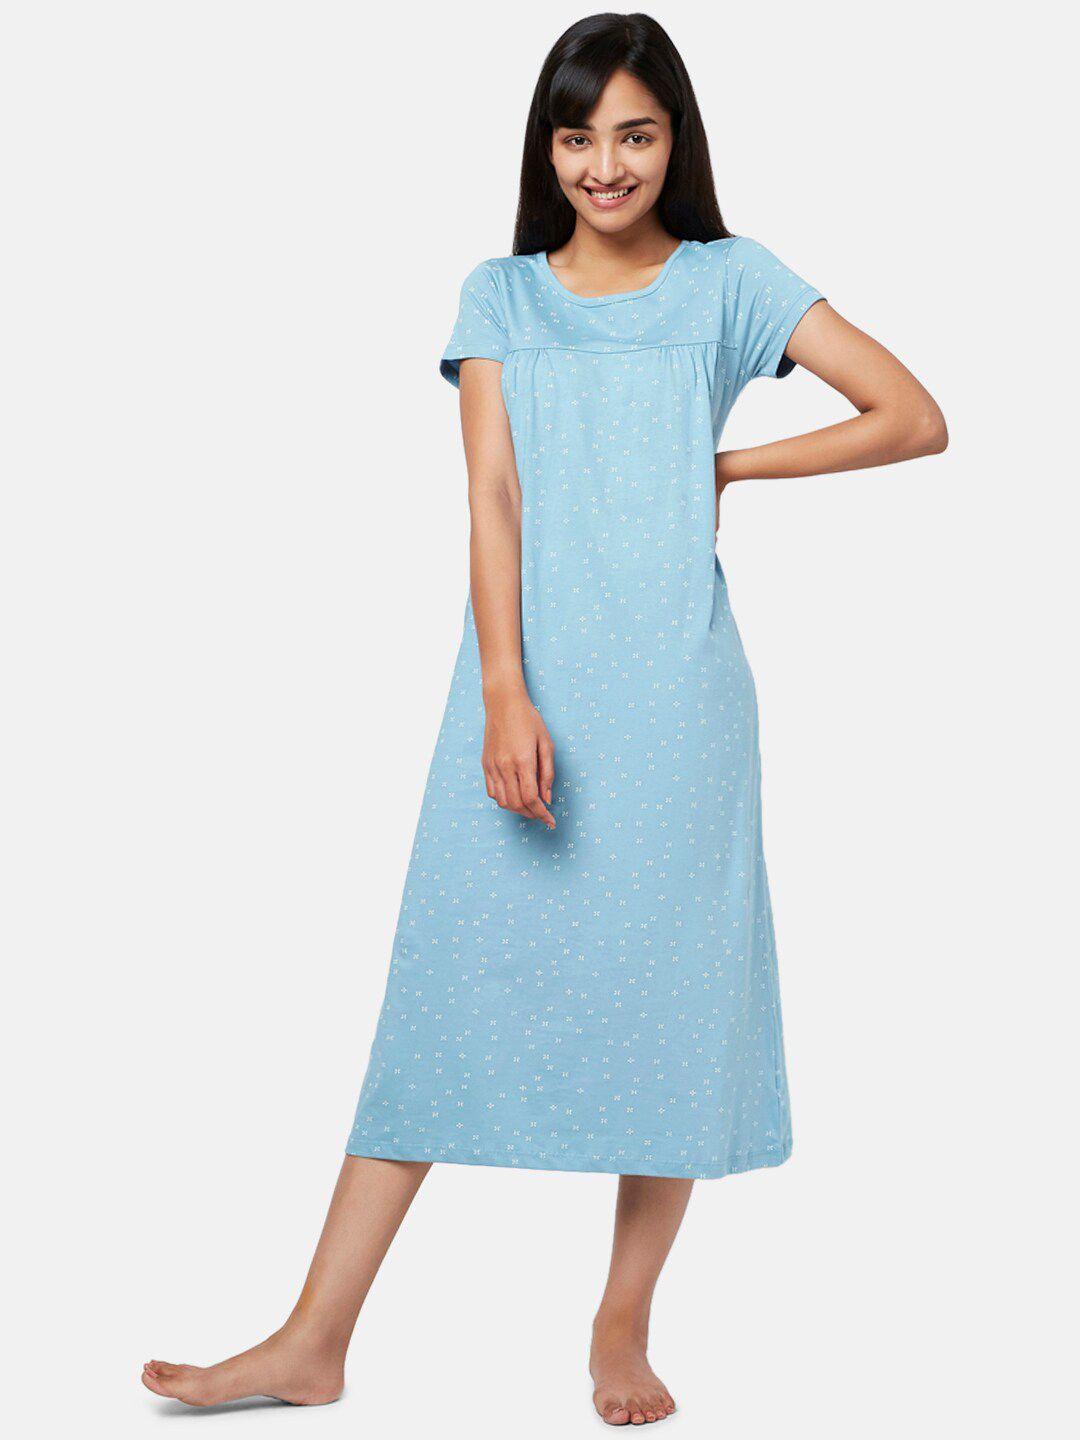 yu by pantaloons women blue floral printed nightdress